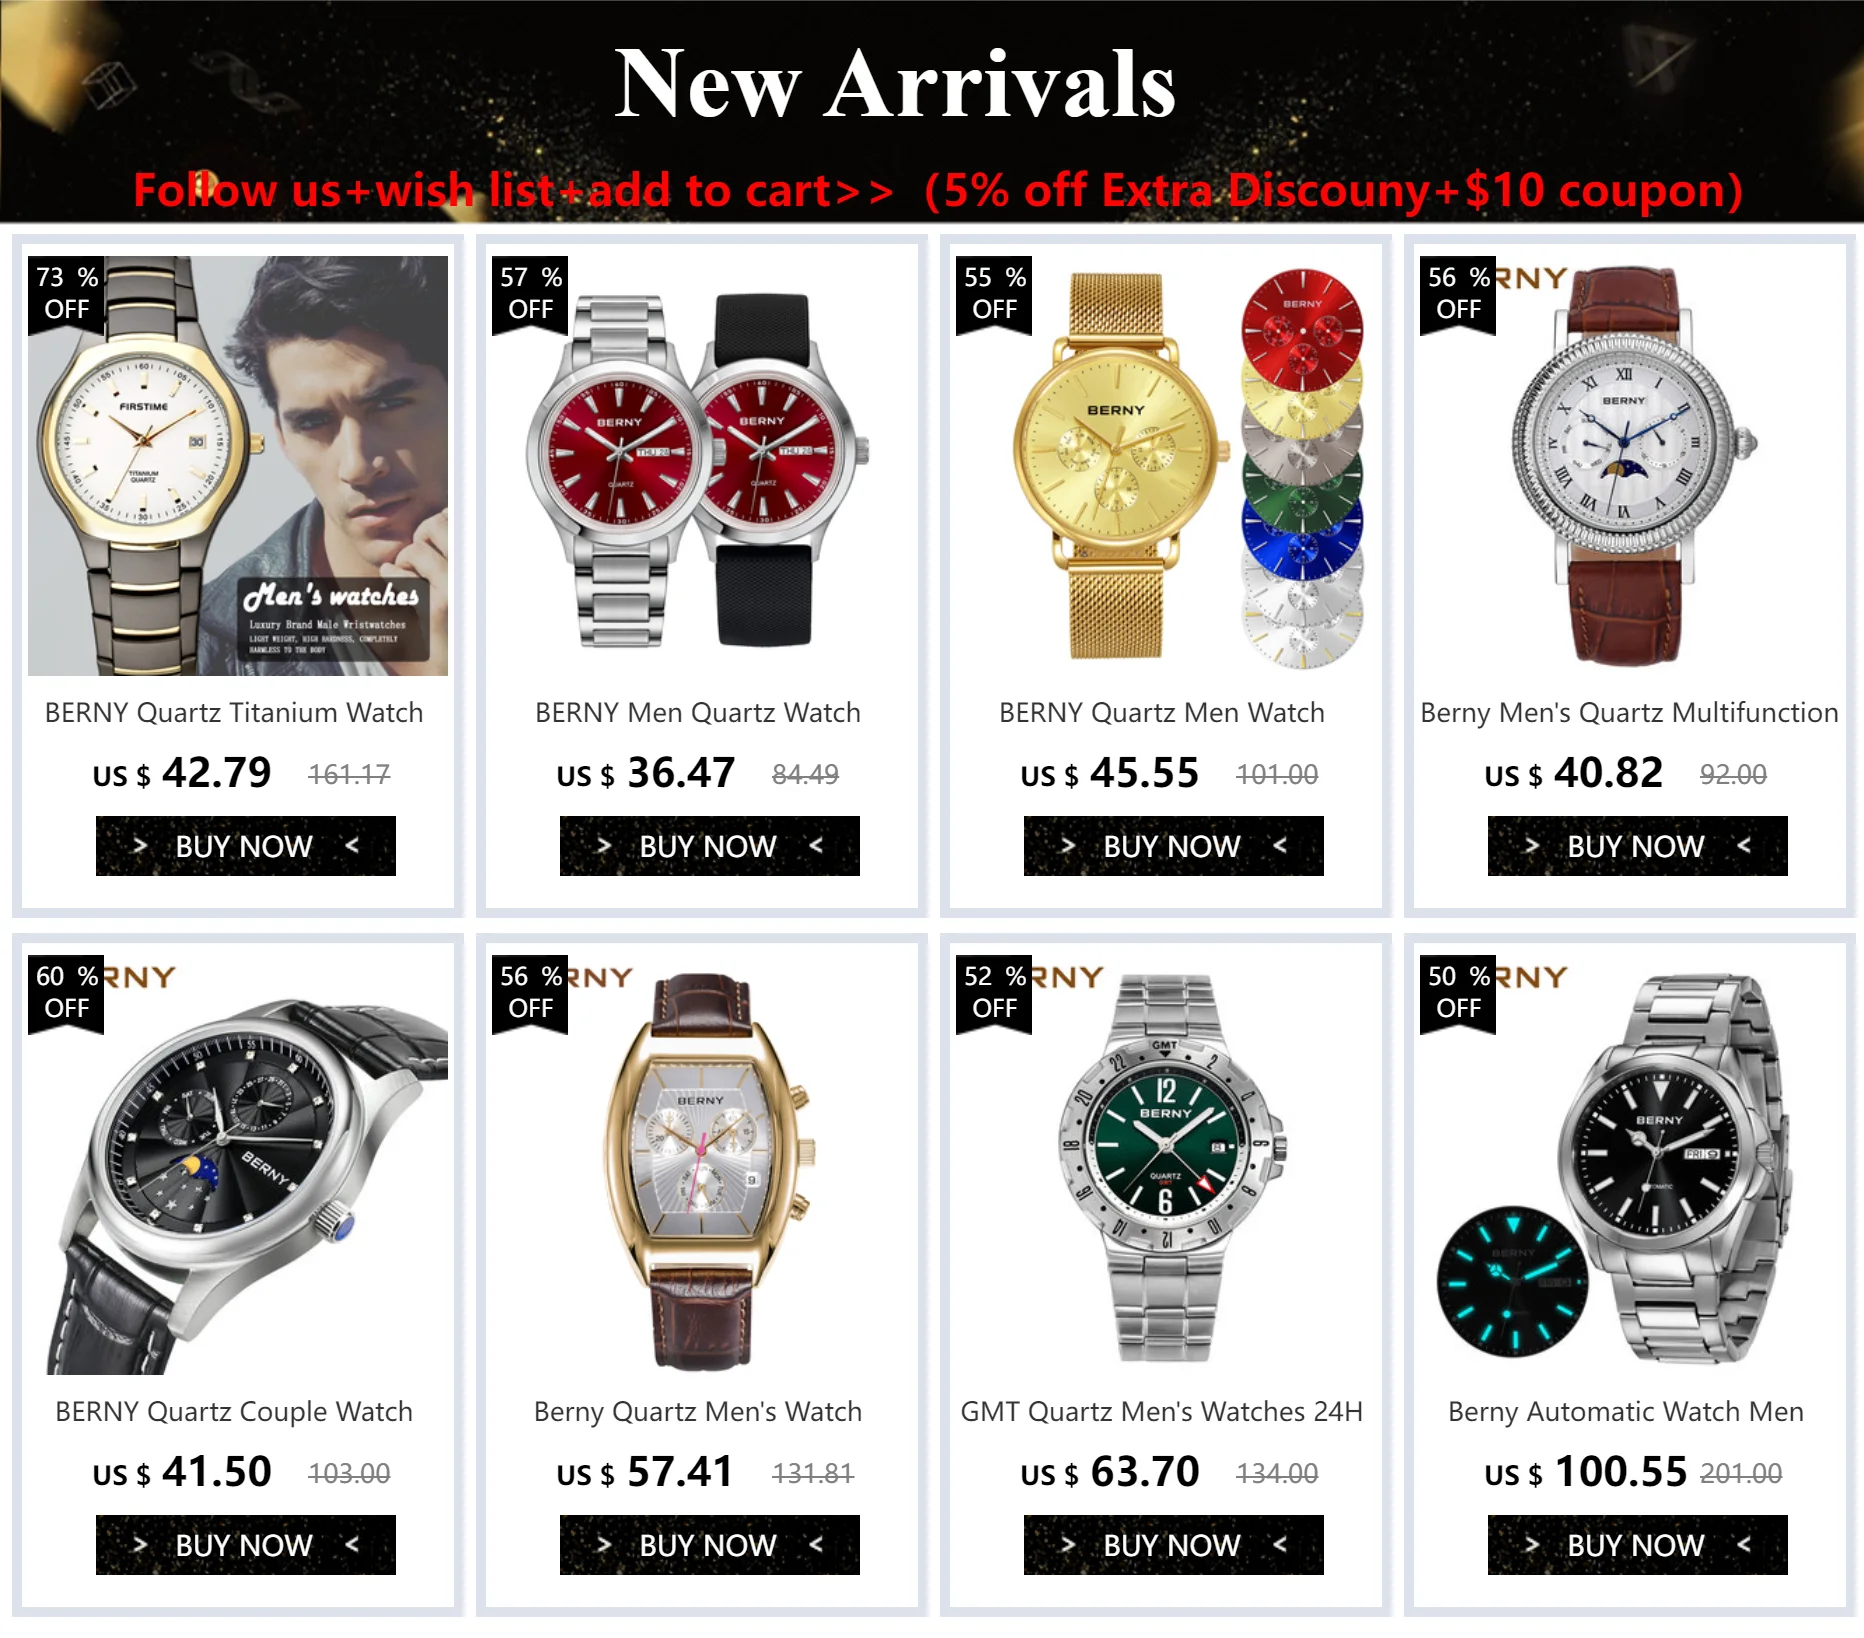 Calendar Luxury Waterproof Wristwatch Miyota Watch Luminous Stainless Steel Silicone Dress Watch for Men -S267bfb28569543e8b844b812abbfffc89